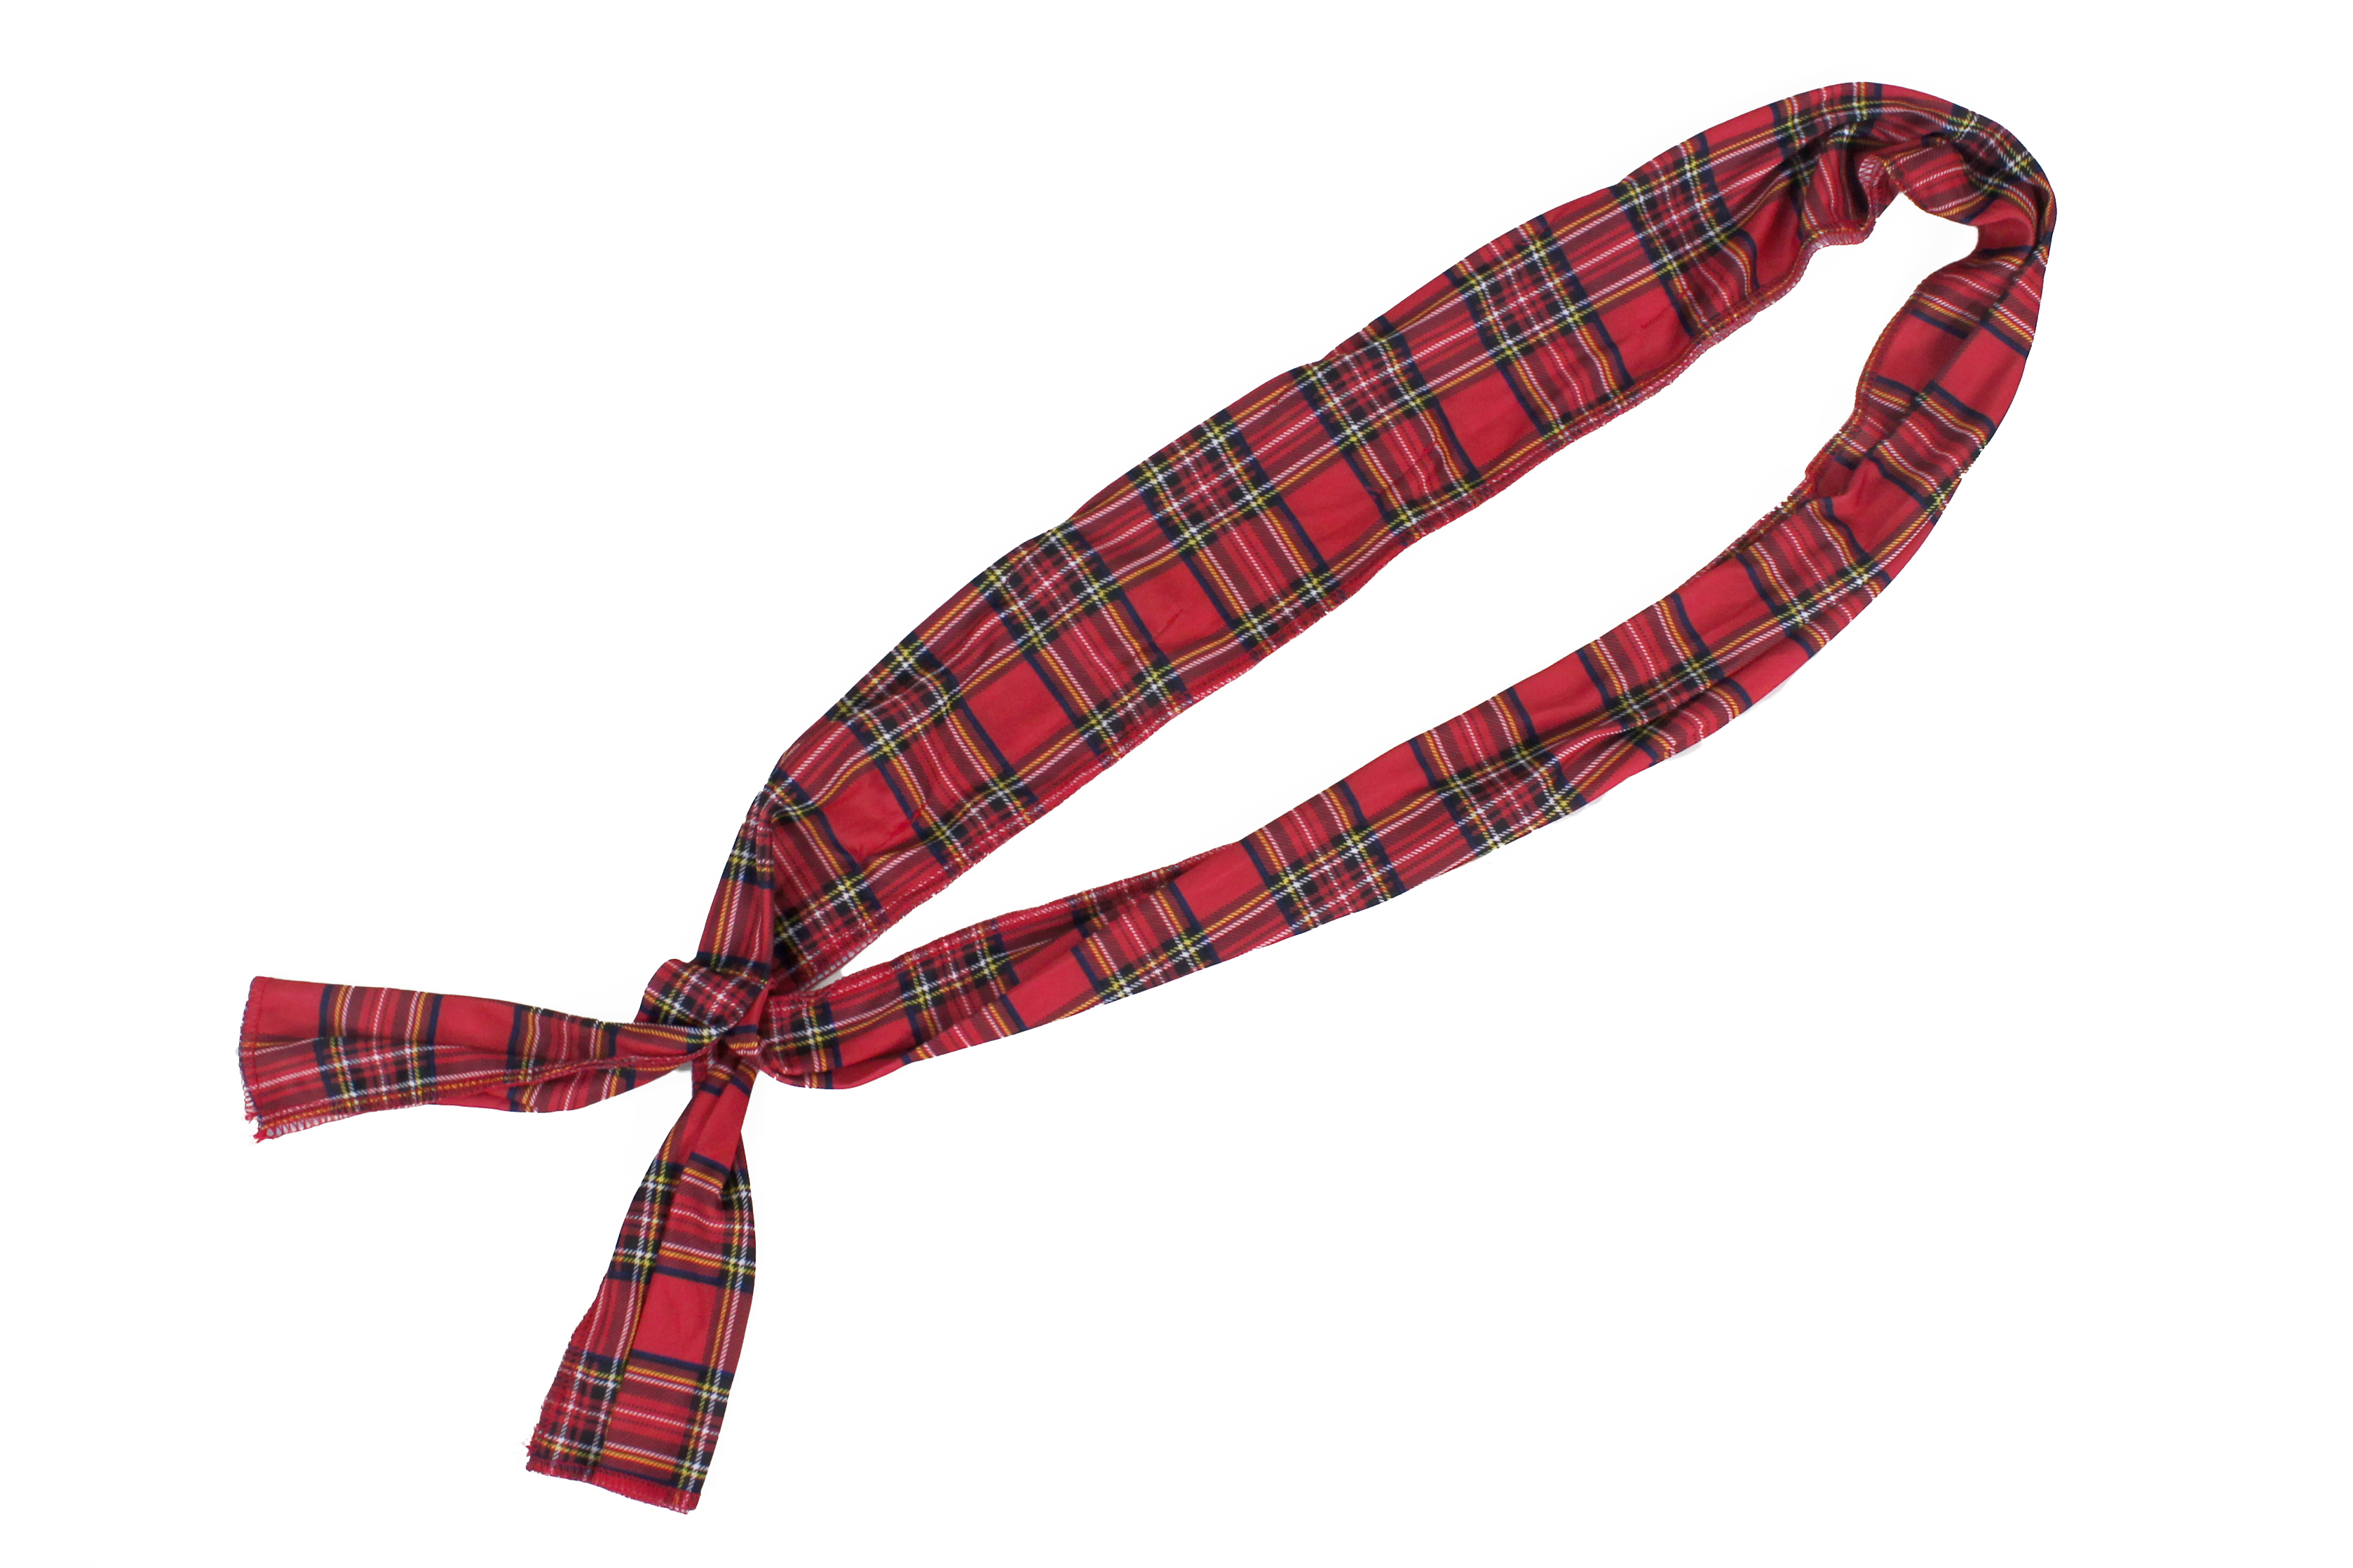 highland scot costume sash